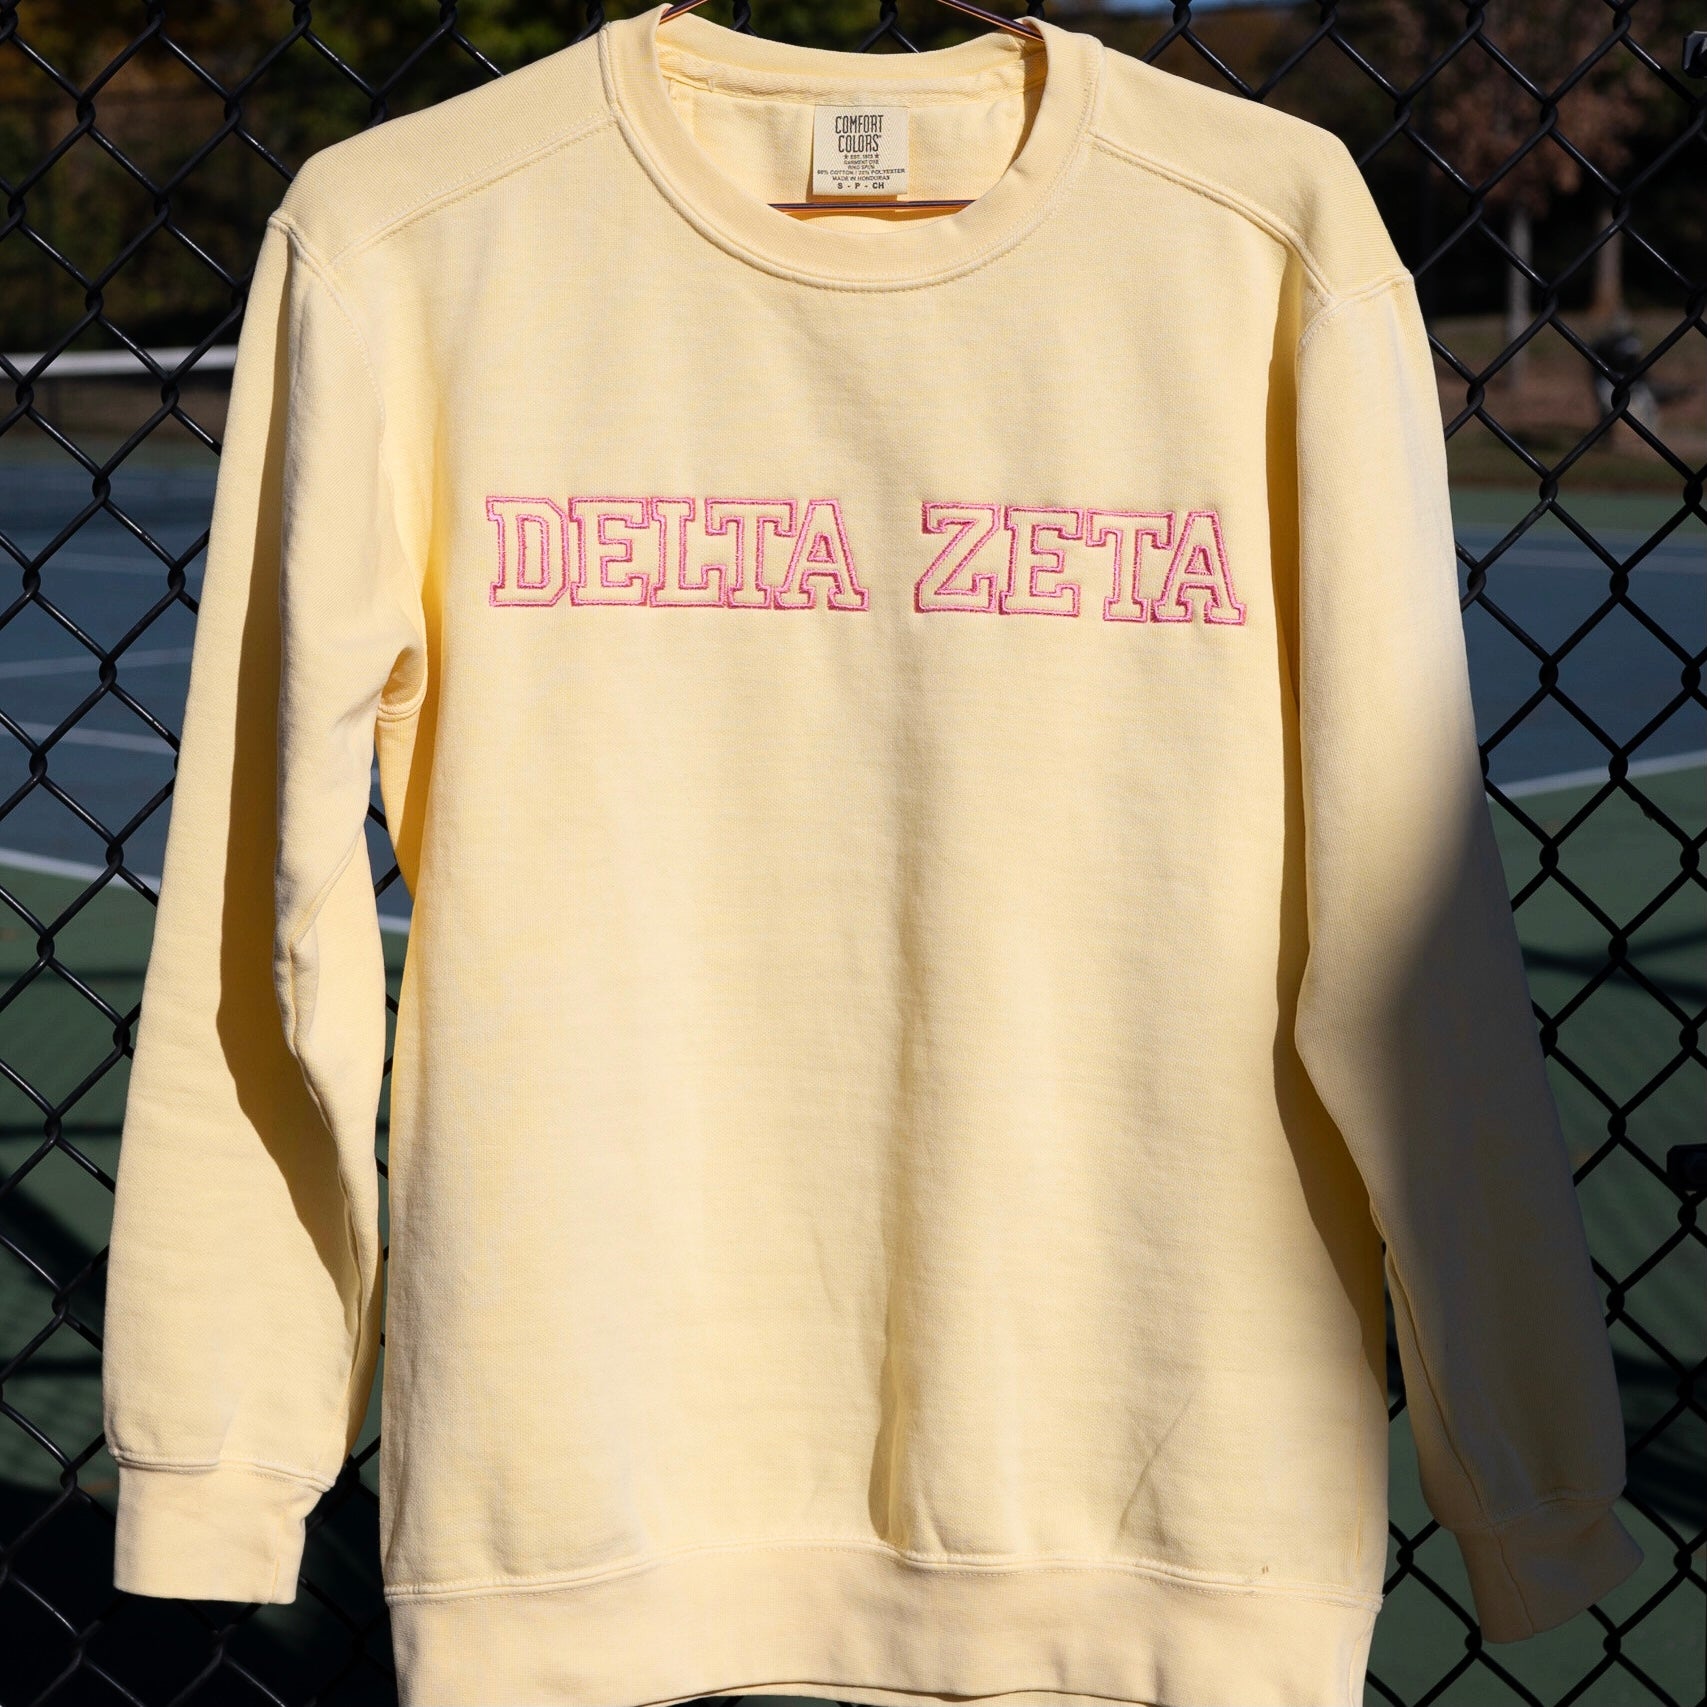 Too Cool for School Embroidered Crewneck Sweatshirt